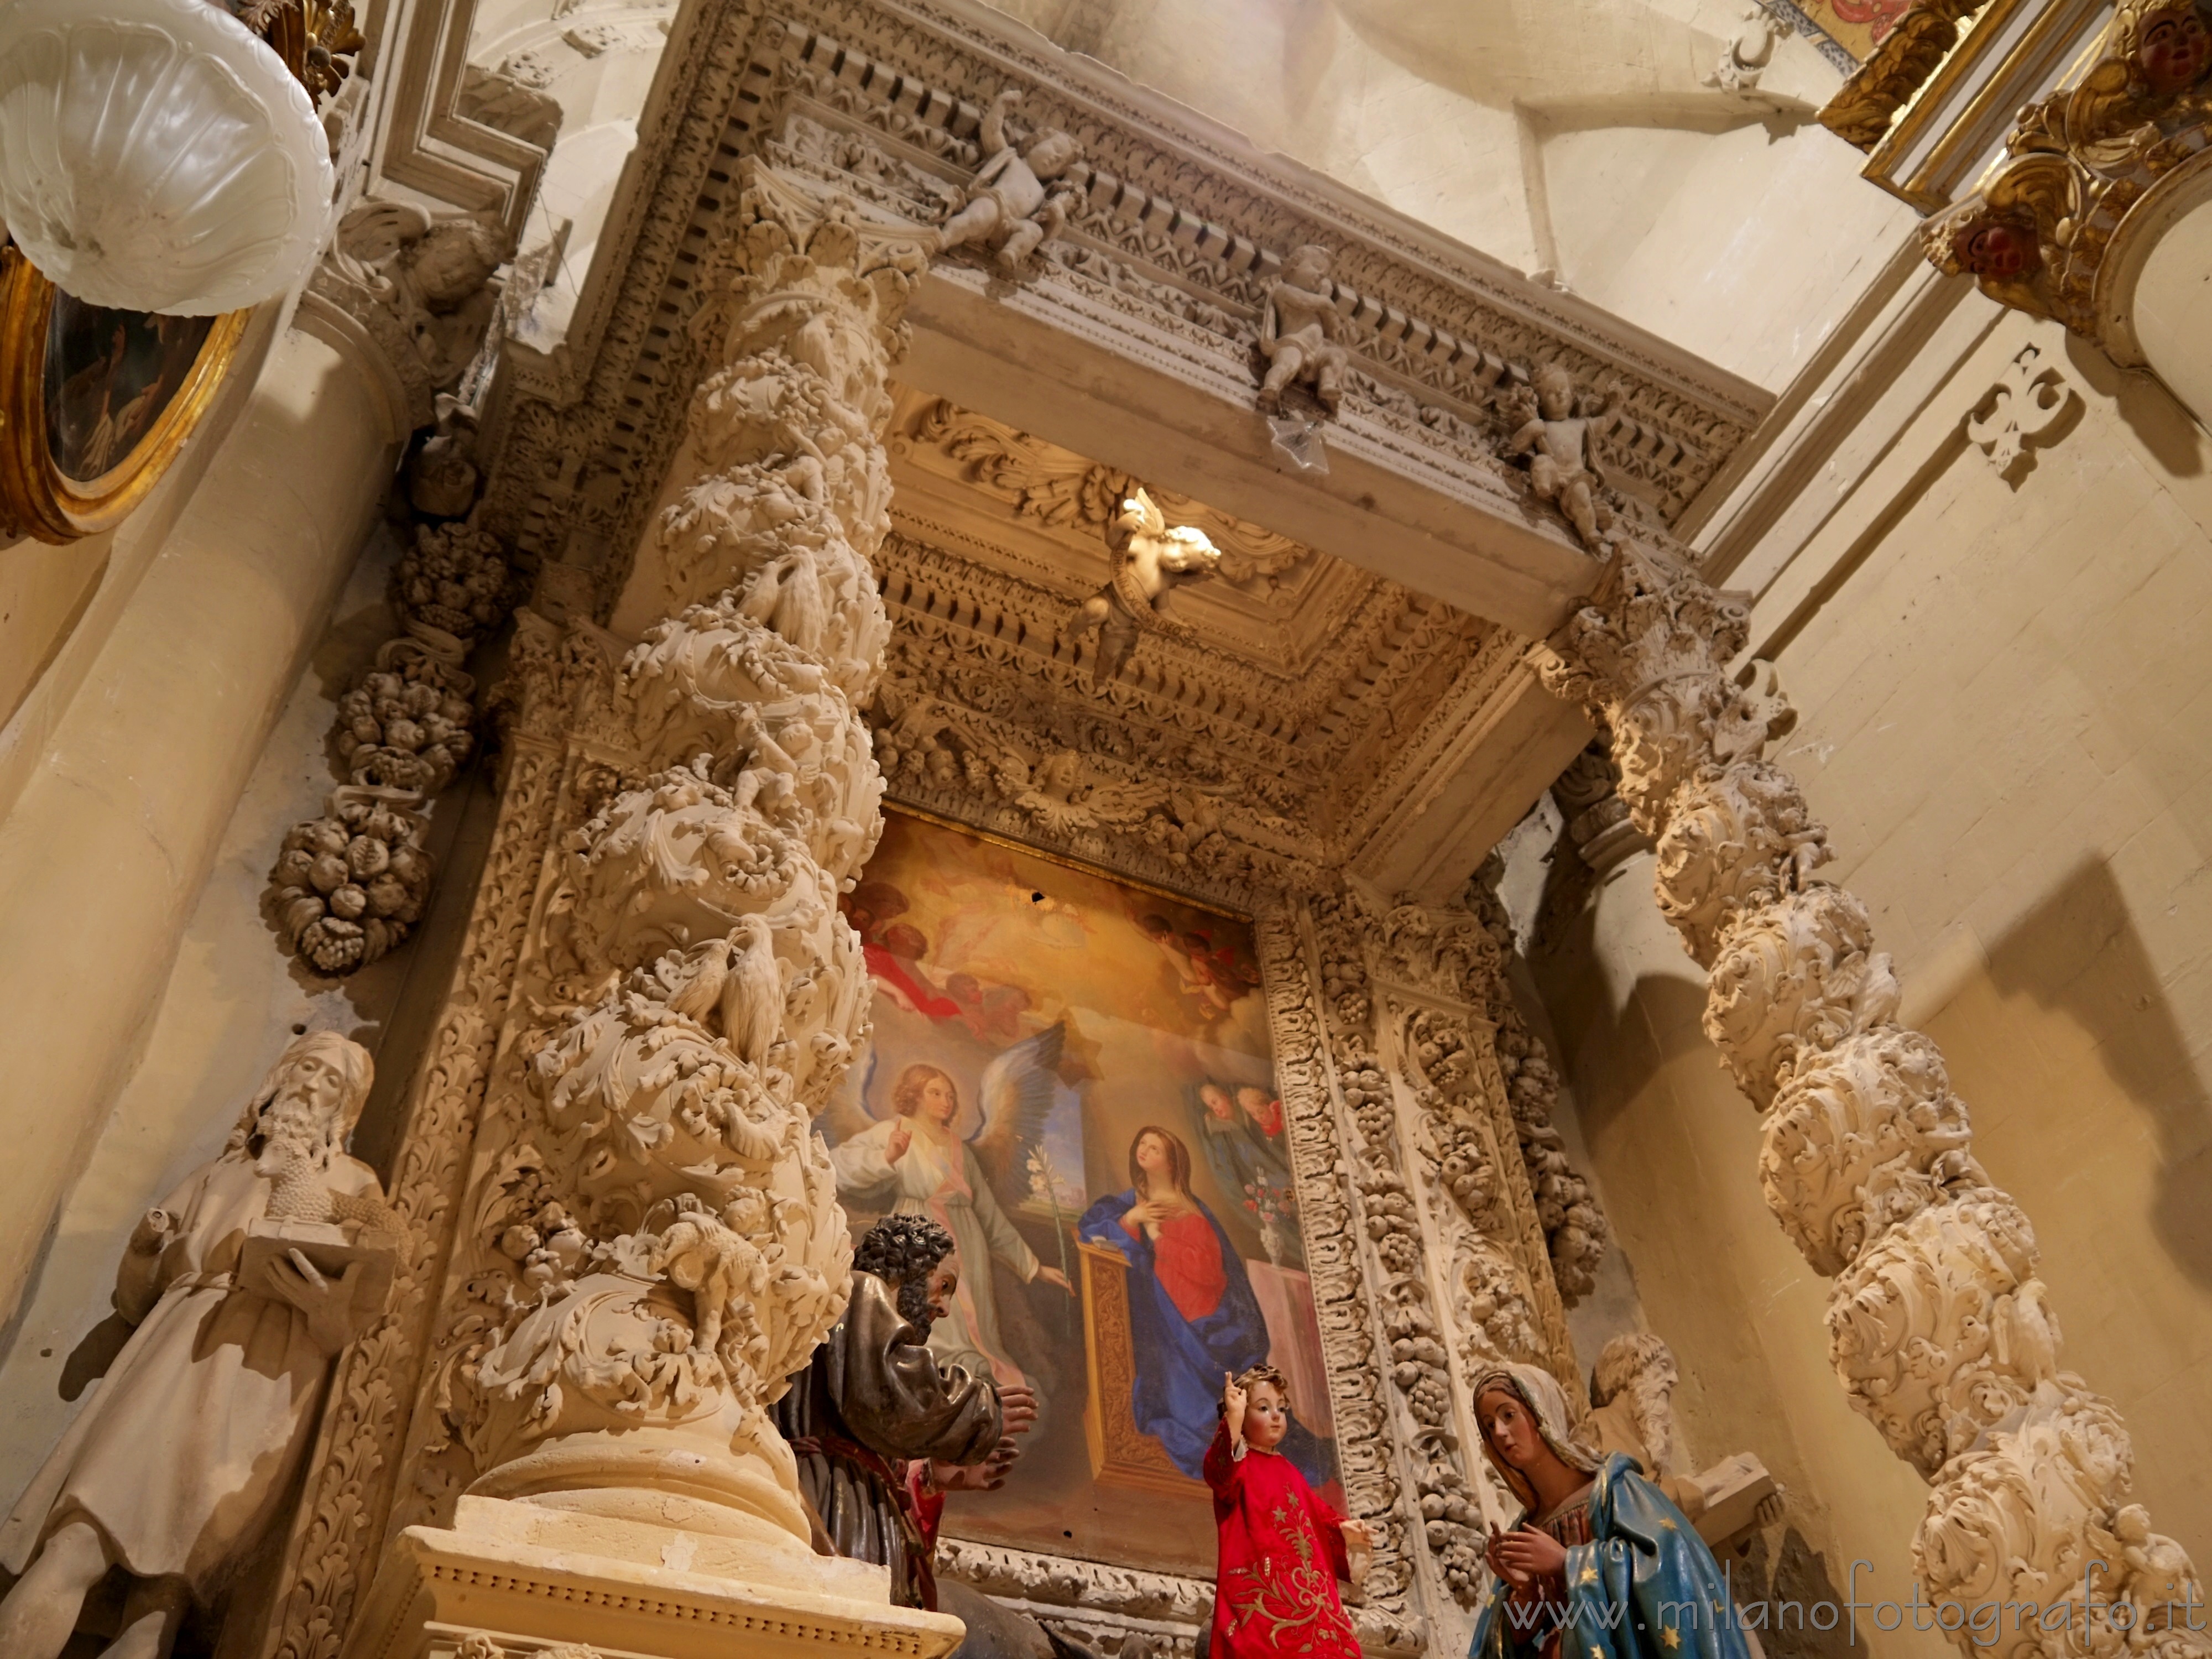 Lecce (Italy): Altar with nativity scene in the Duomo - Lecce (Italy)